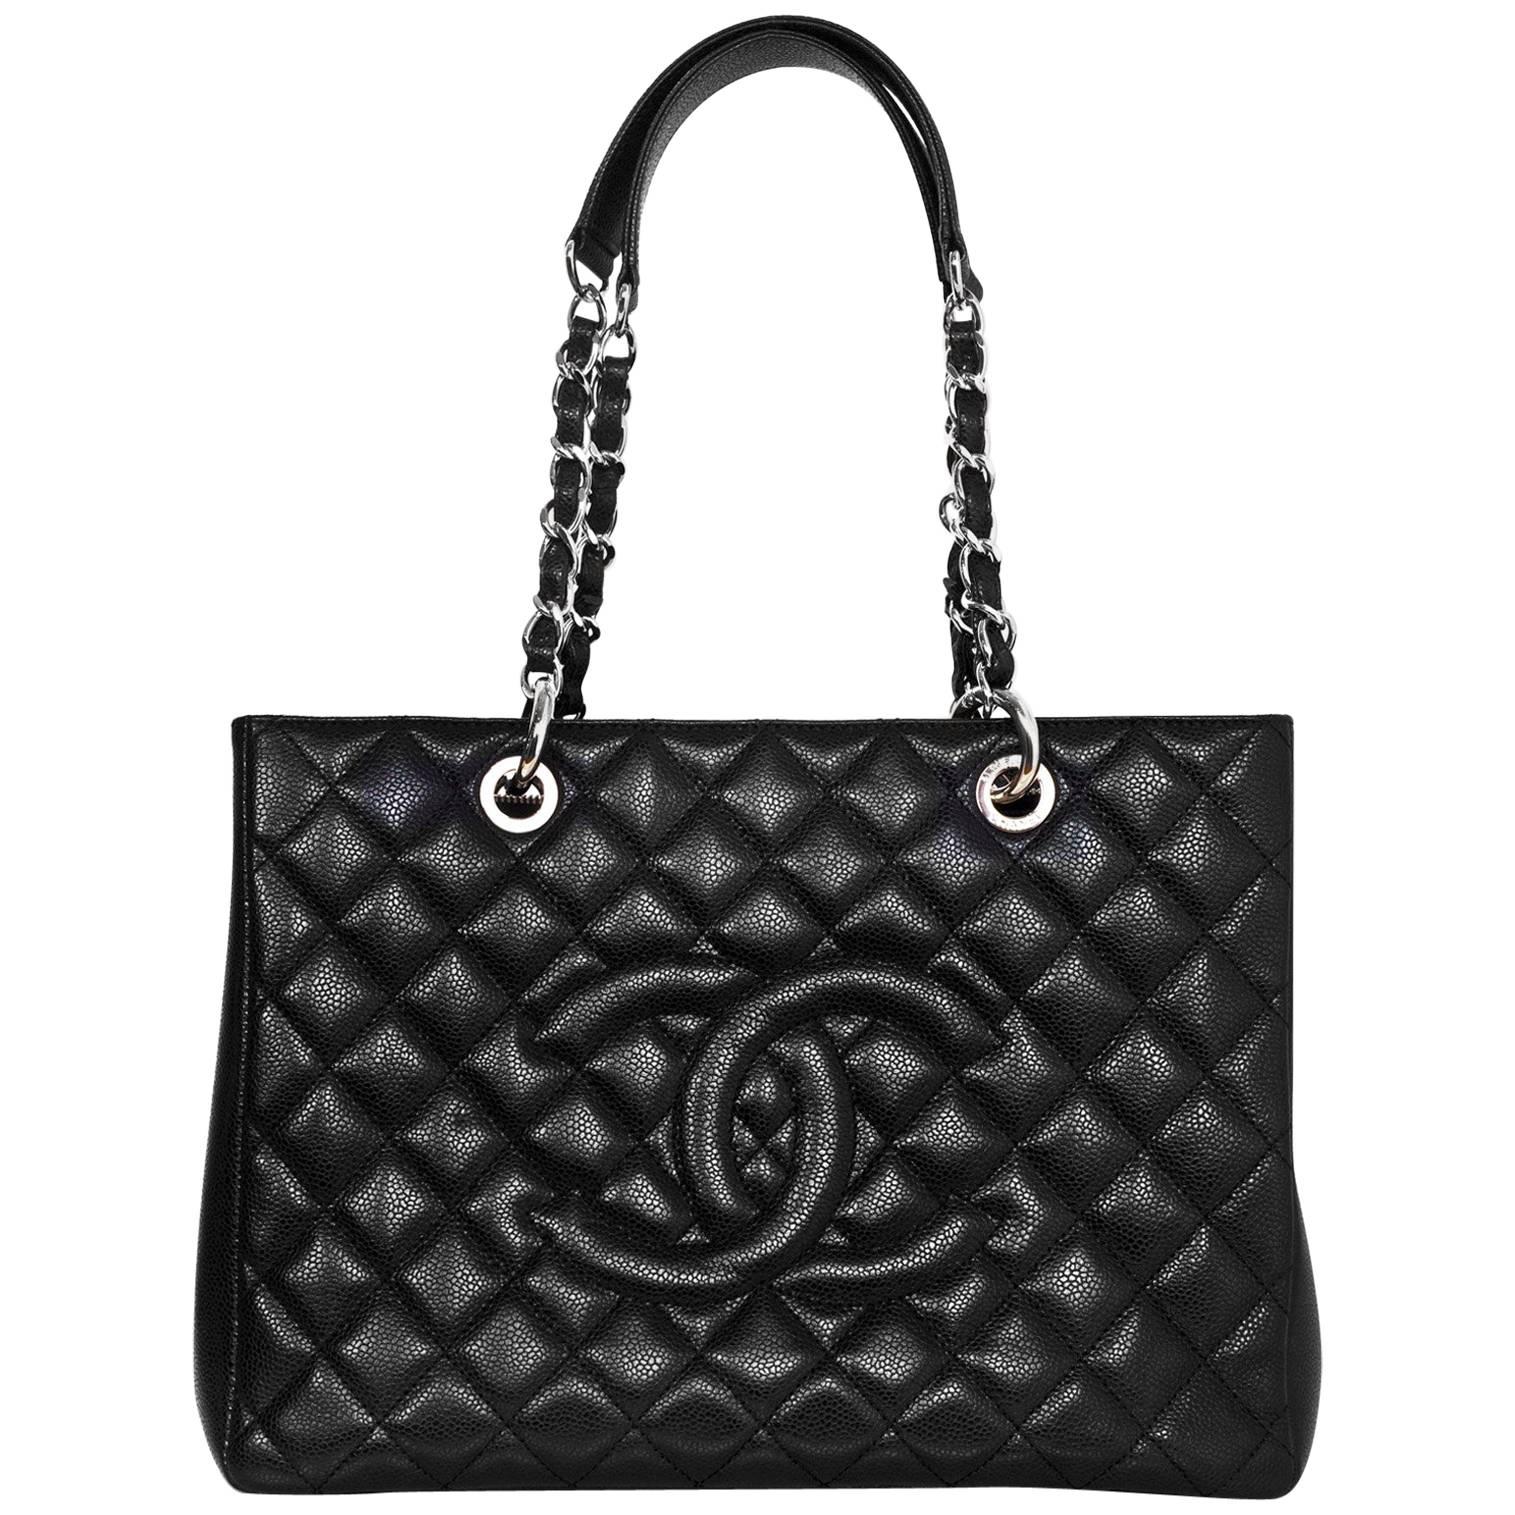 Chanel Black Caviar Leather GST Grand Shopper Tote Bag with SHW